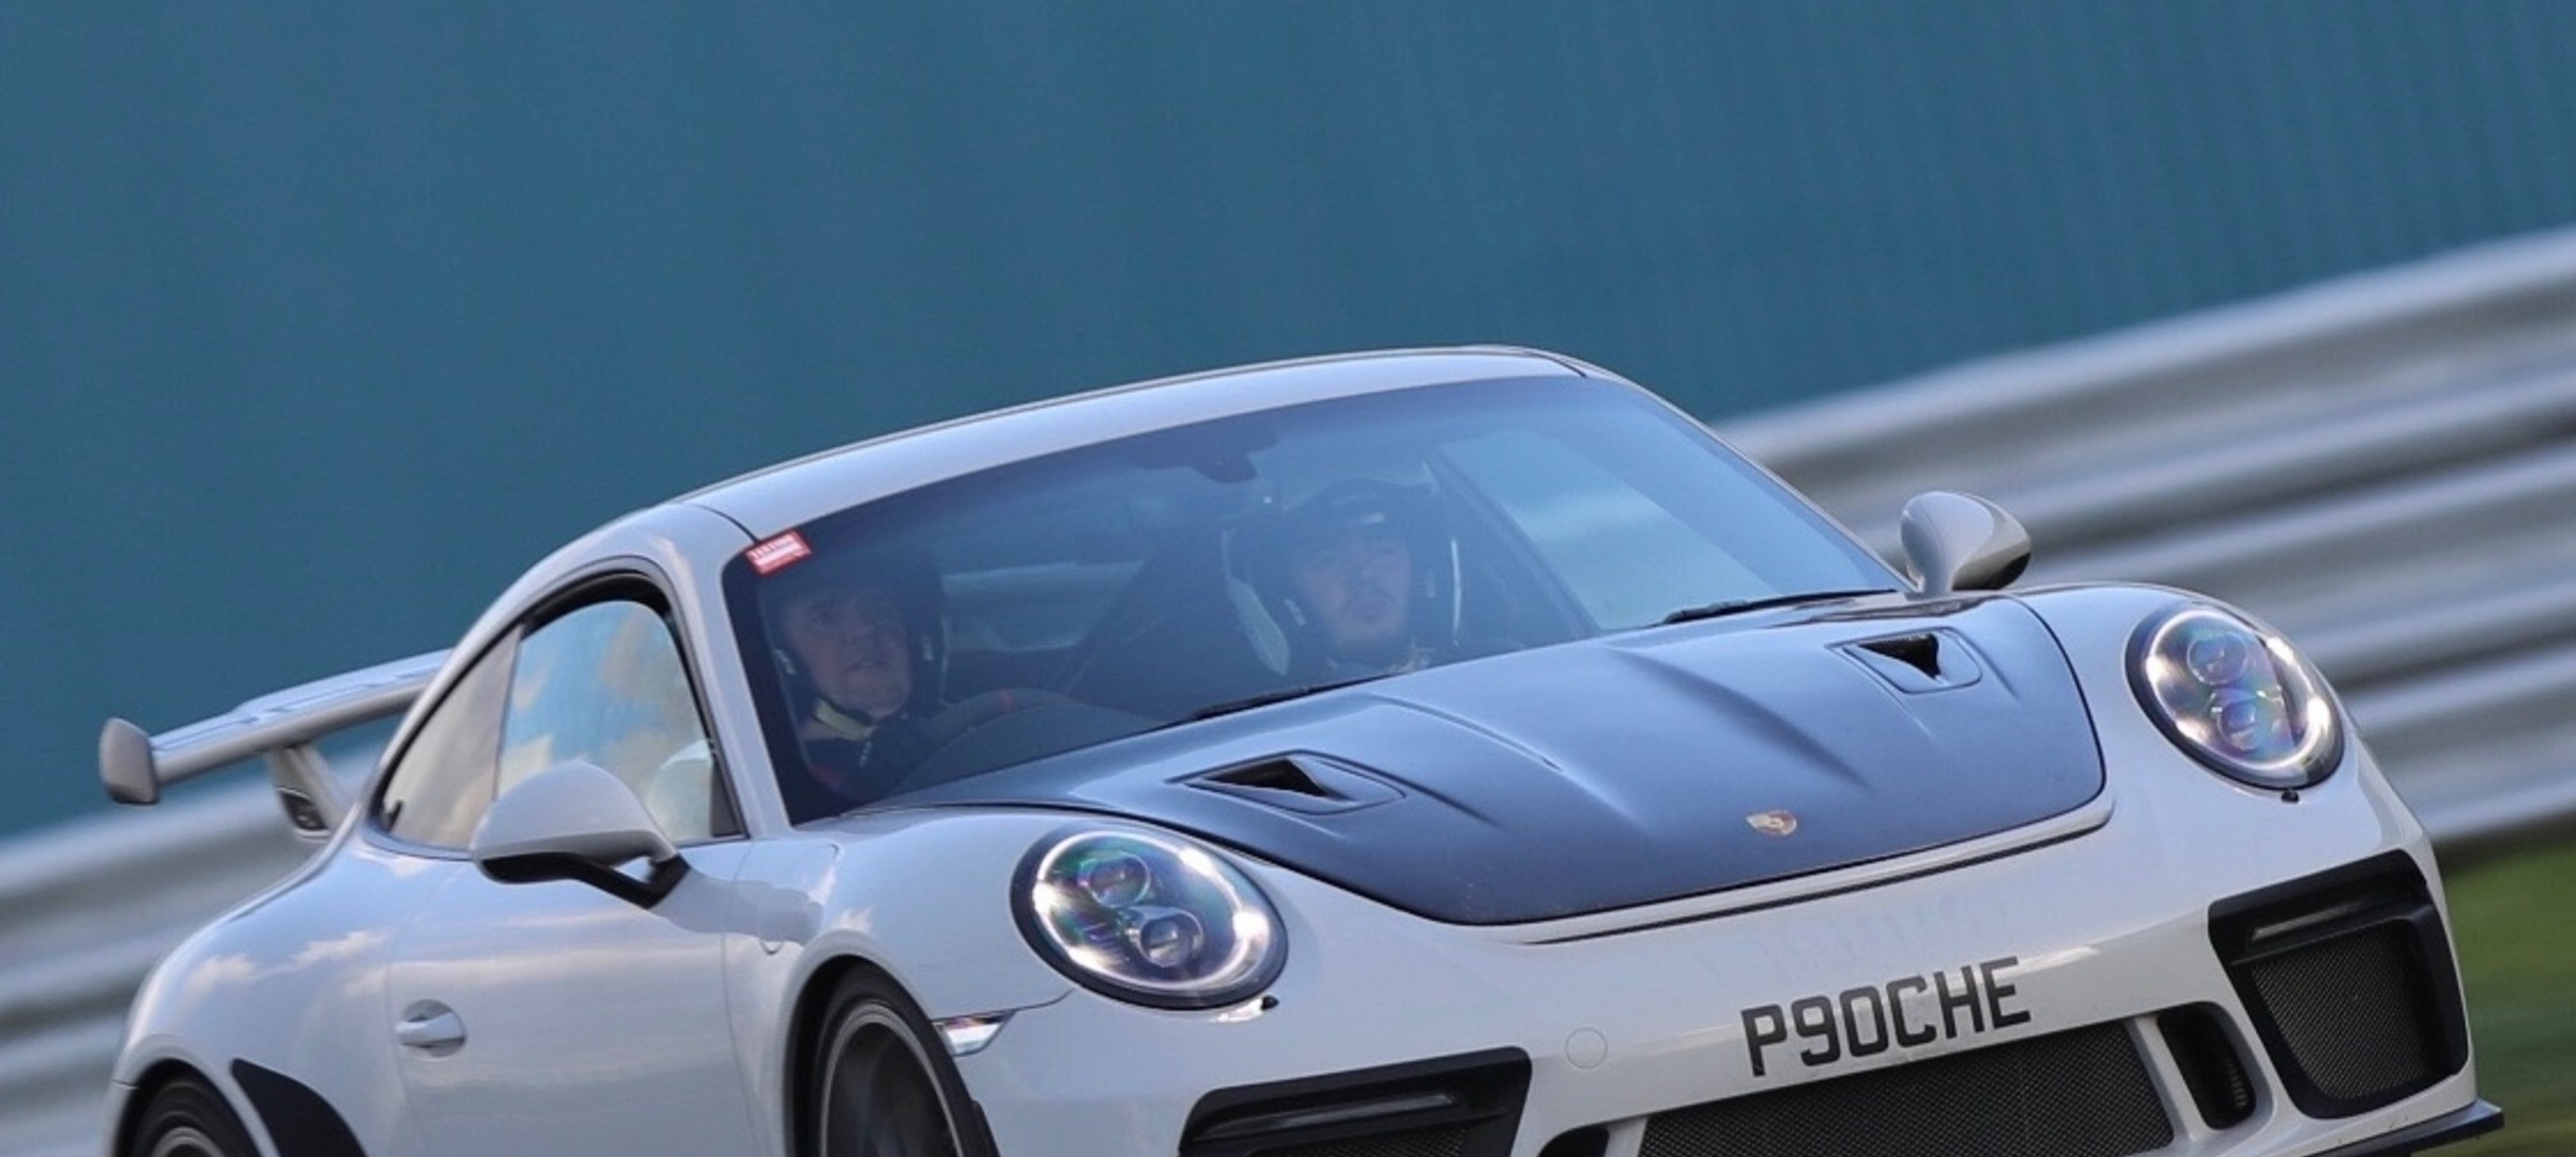 Porsche GT3 with carbon hood